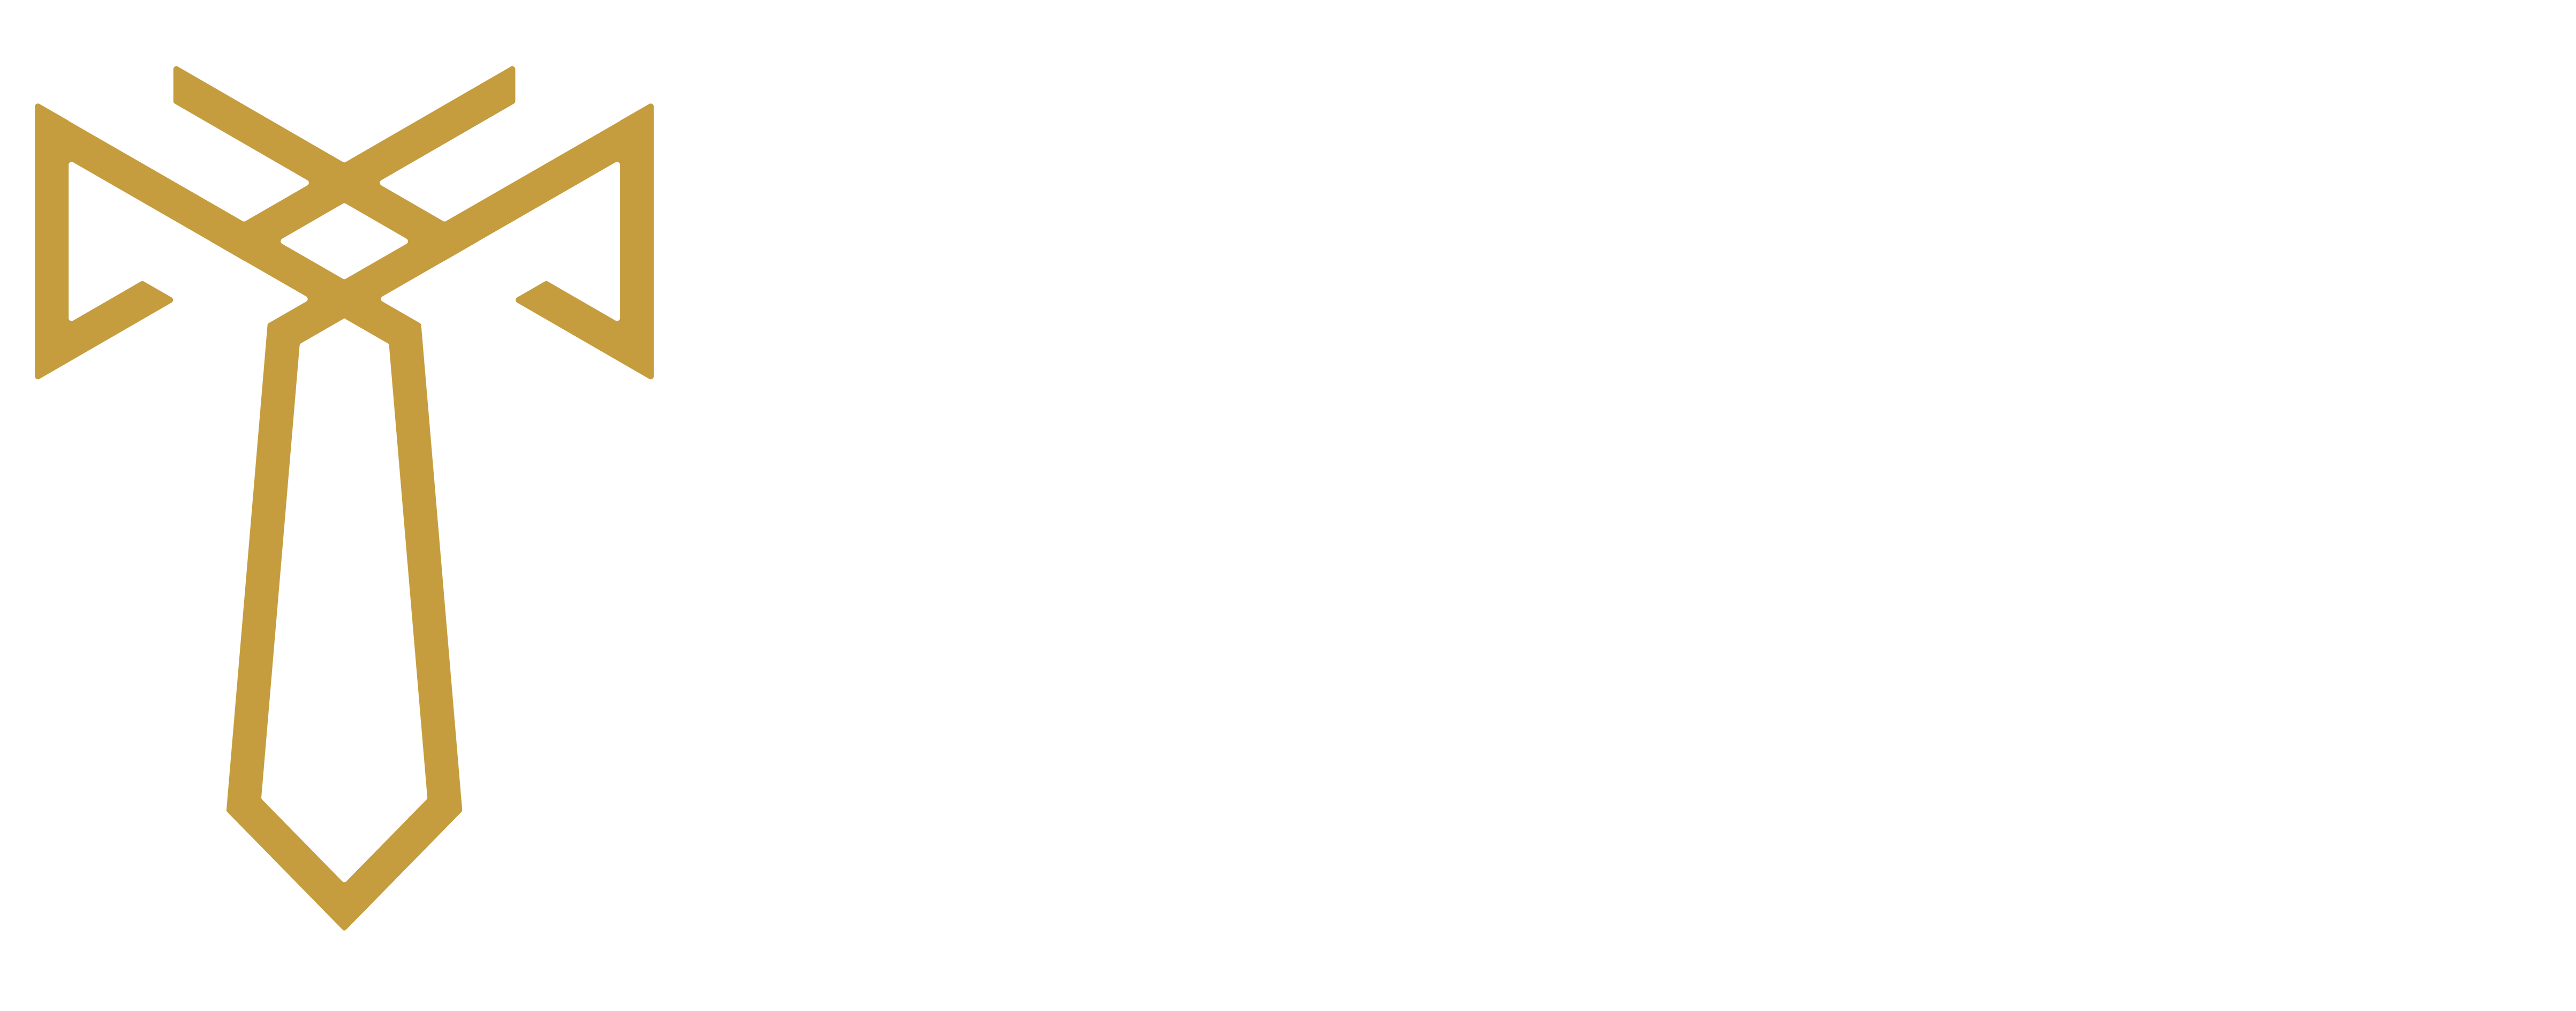 Embassy Suit Gallery